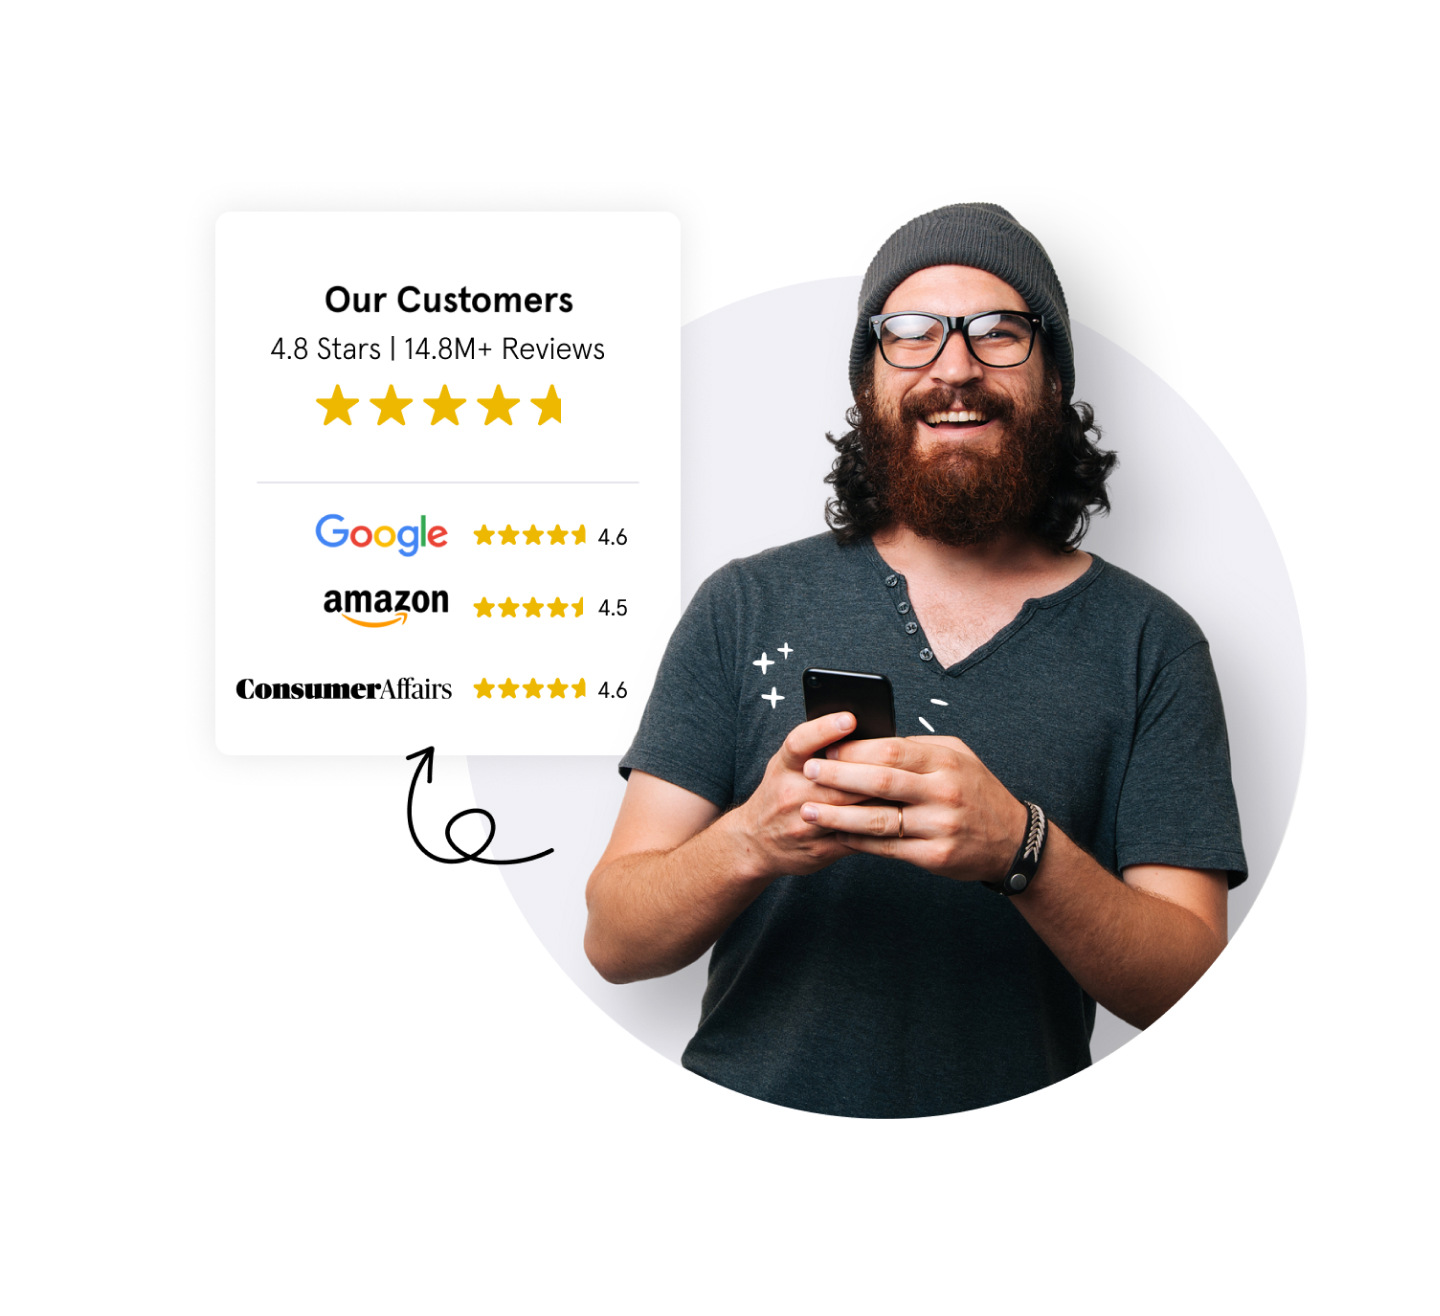 Our Customers. 4.8 Stars. 14.8M+ Reviews. Google 4.6 stars. Amazon 4.5 stars. Consumer Affairs 4.6 stars.